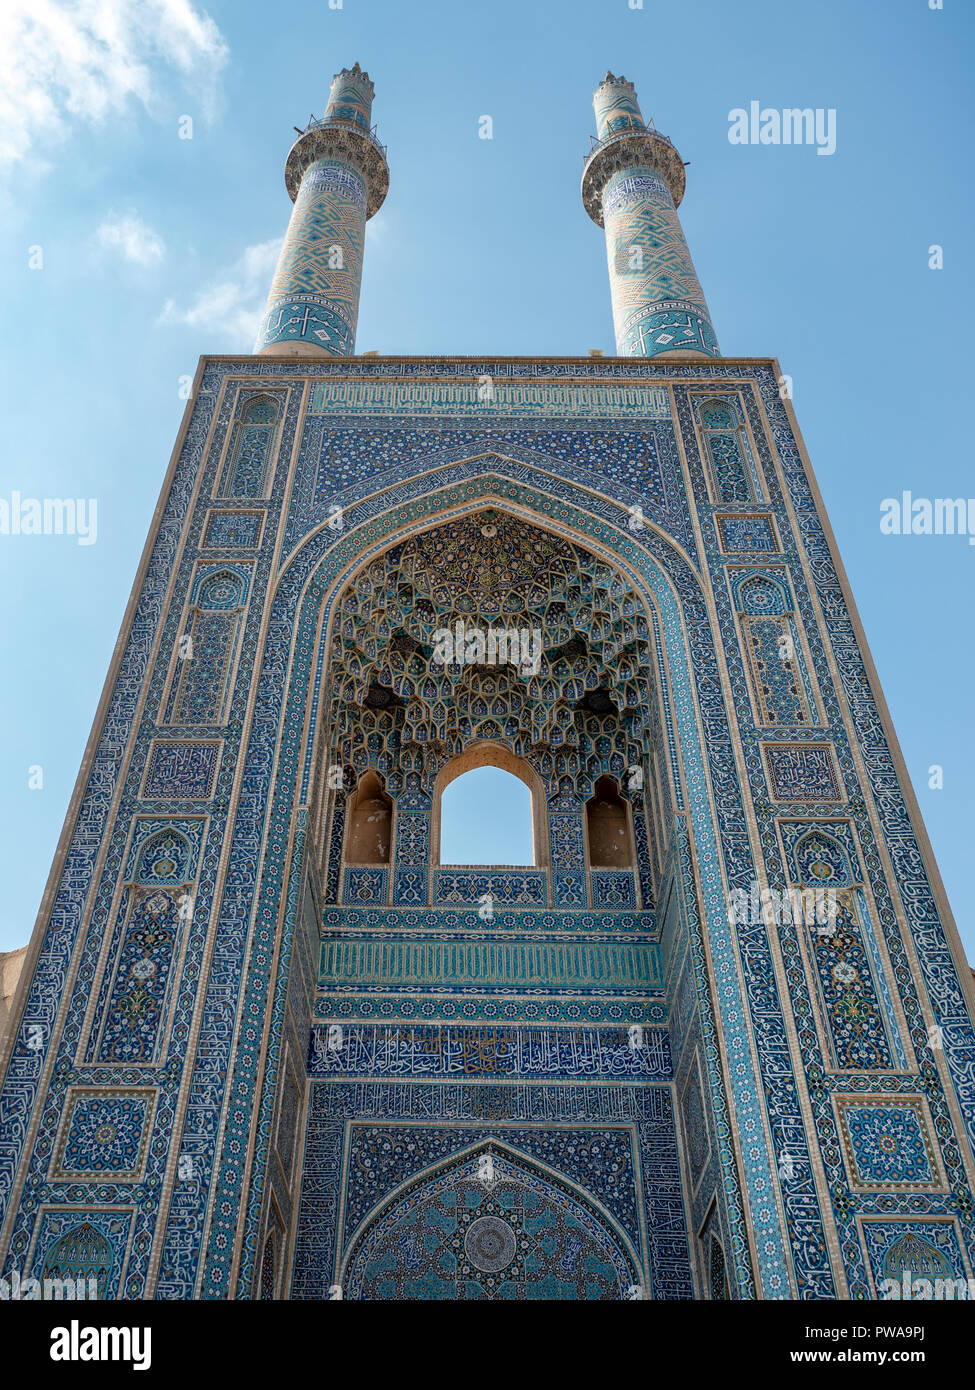 Grand iwan della moschea Jameh, Yazd, Iran Foto Stock